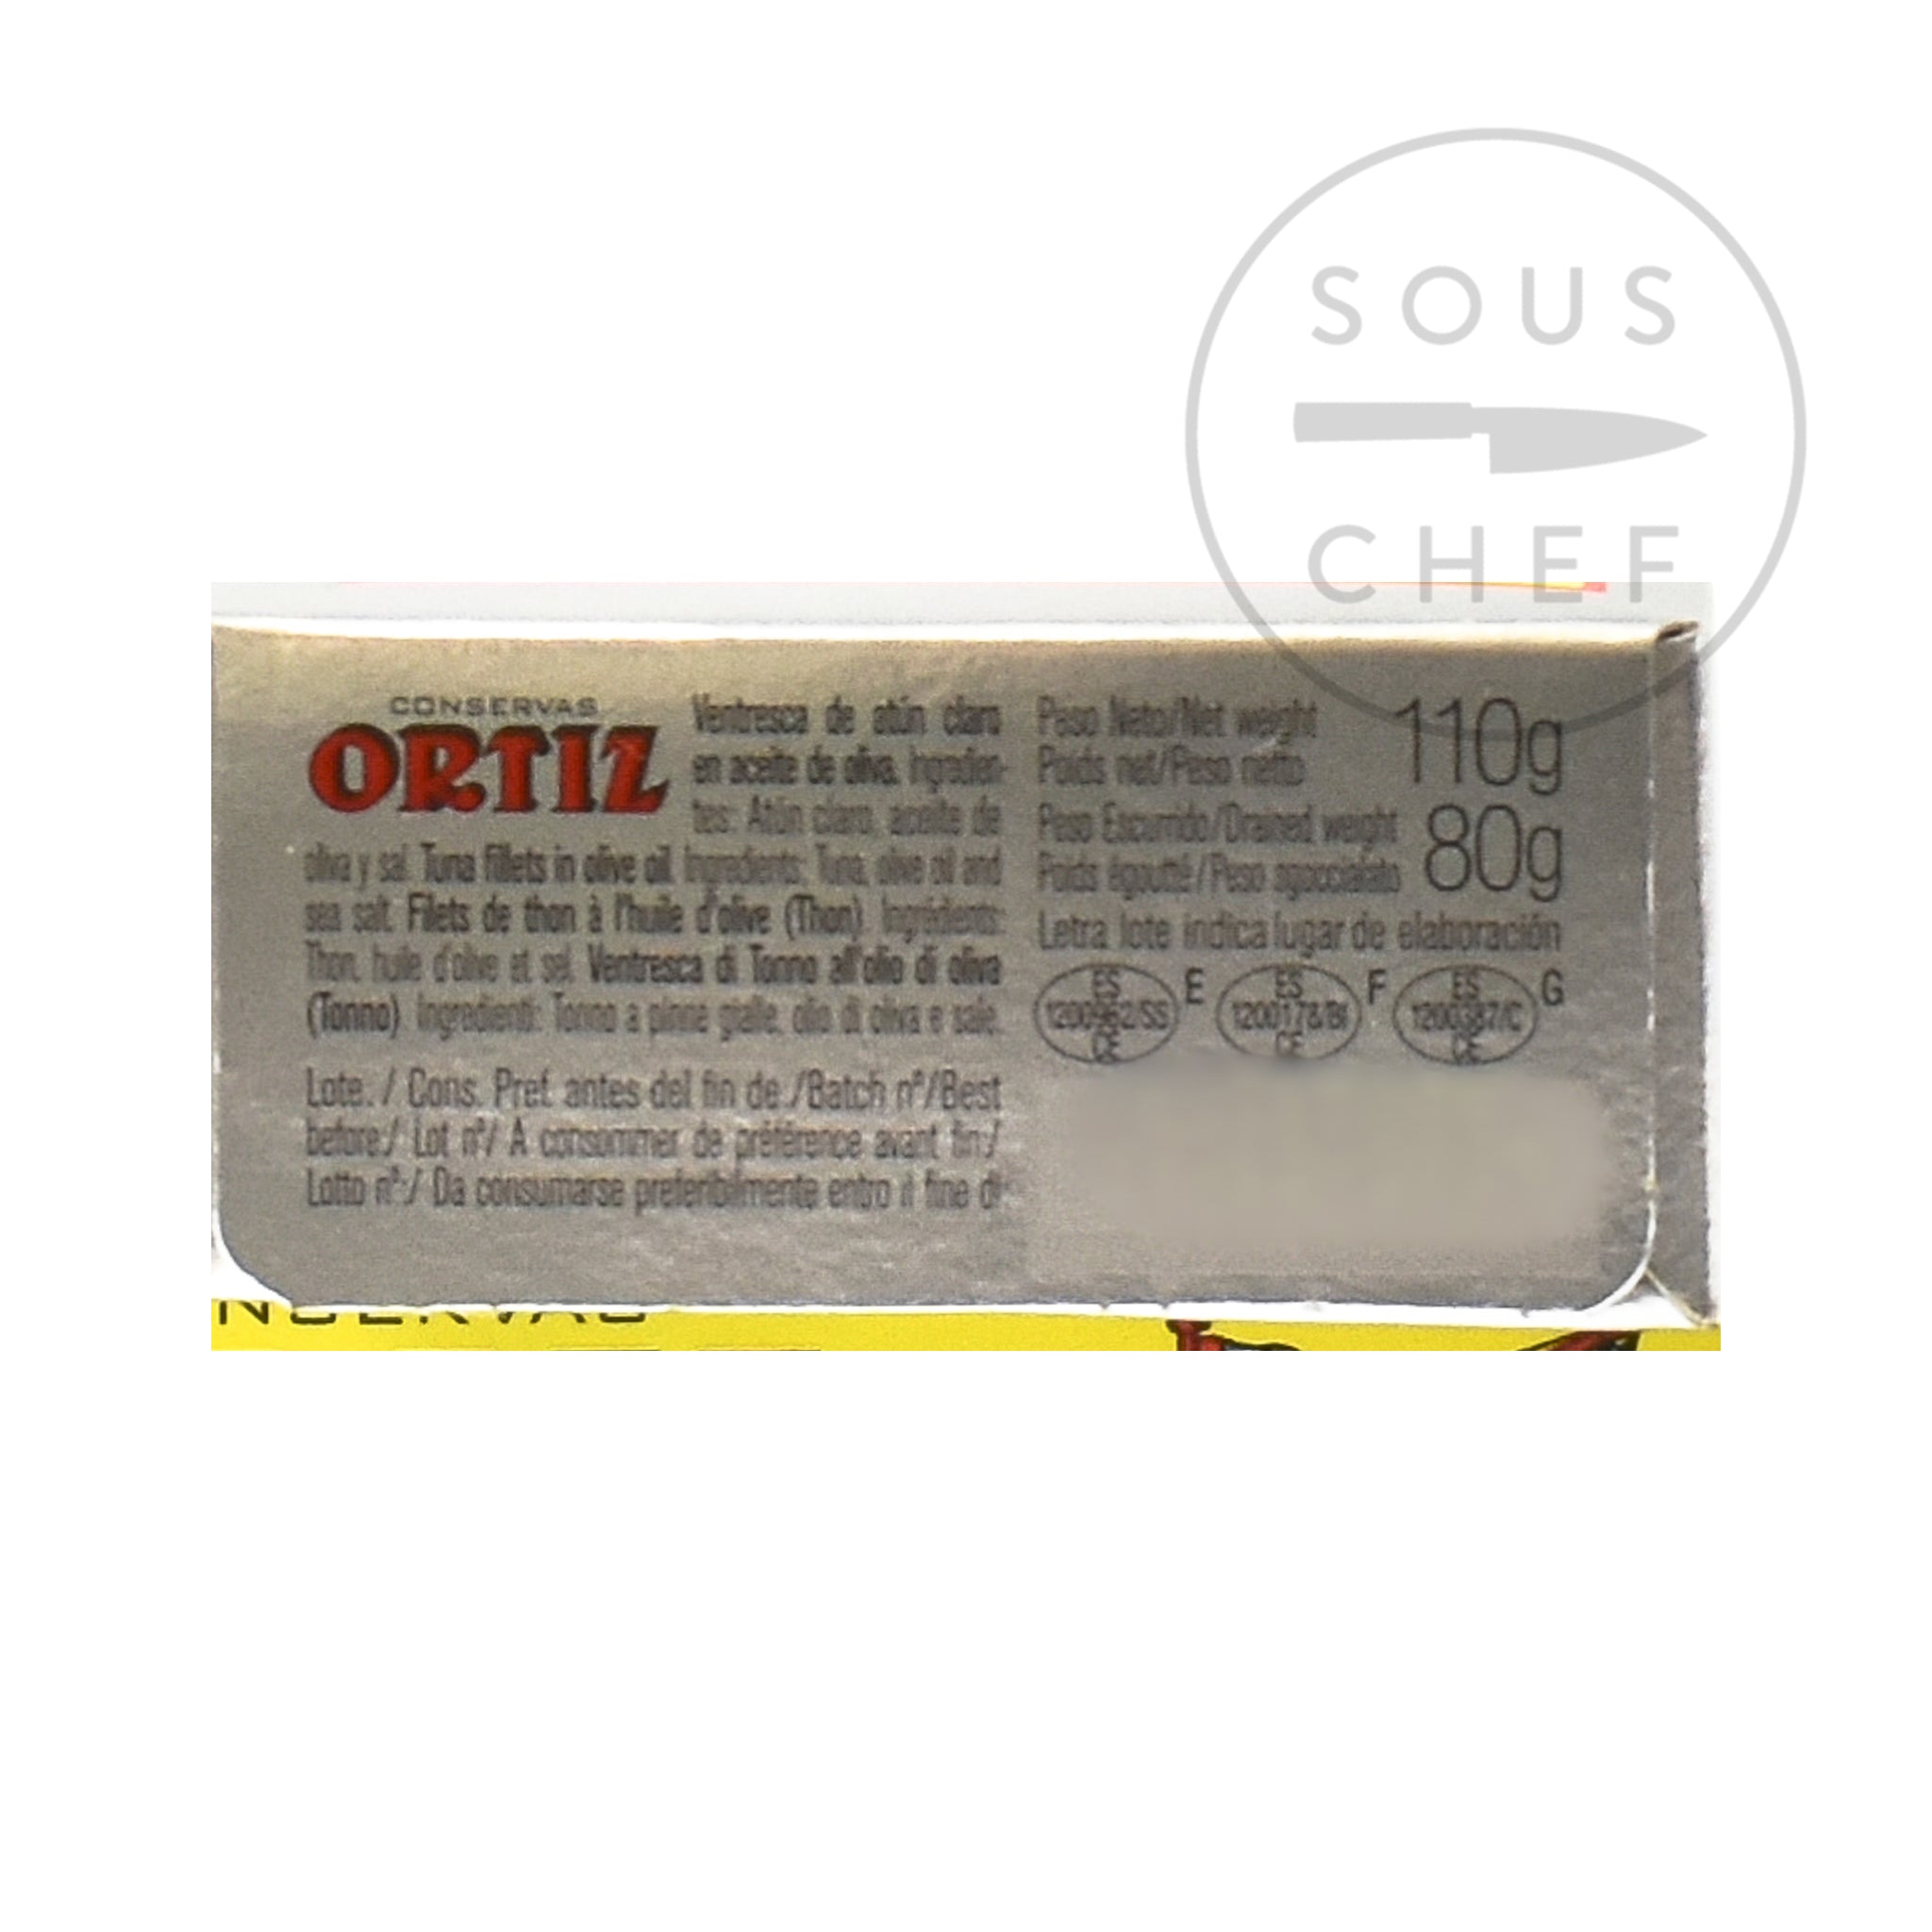 Ortiz Atun Claro Belly In Olive Oil - Ventresca 110g Ingredients Seaweed Squid Ink Fish Spanish Food Ingredients Information